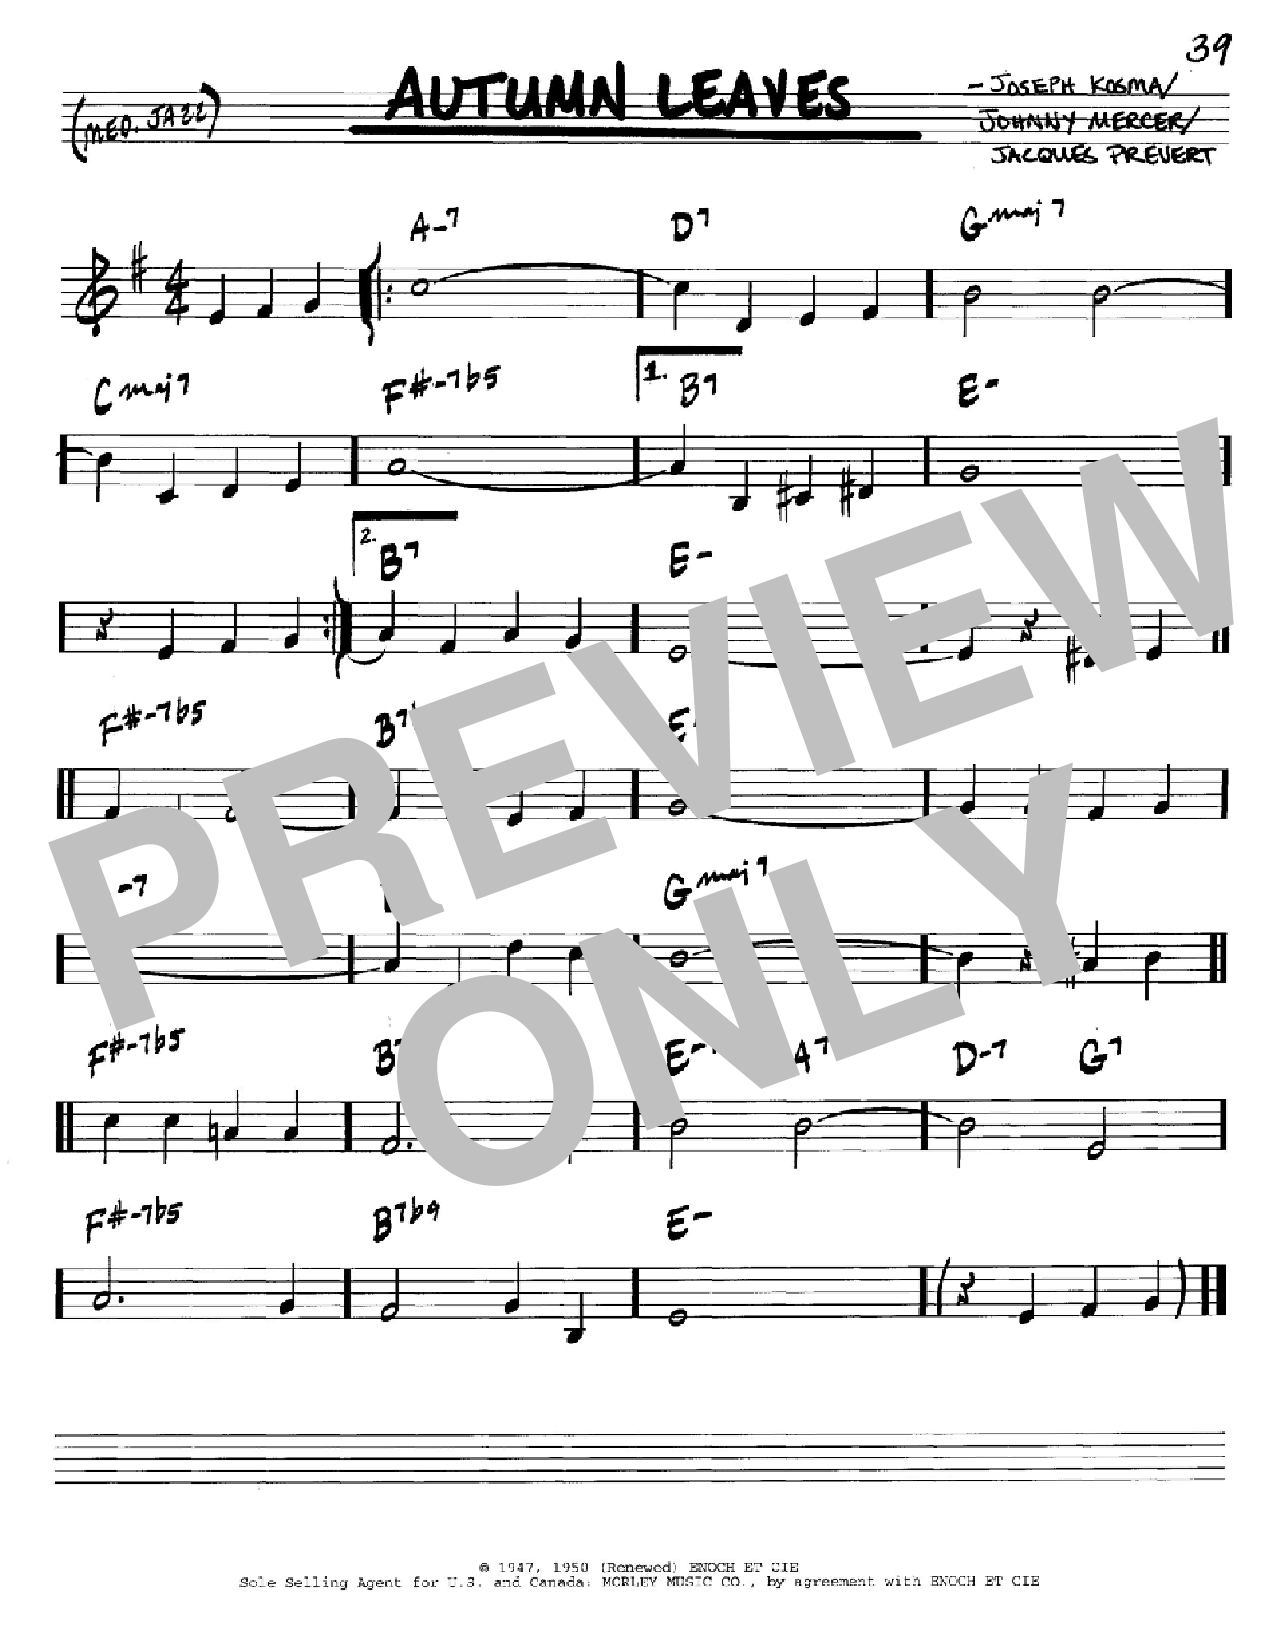 Johnny Mercer Autumn Leaves sheet music notes and chords arranged for Easy Ukulele Tab